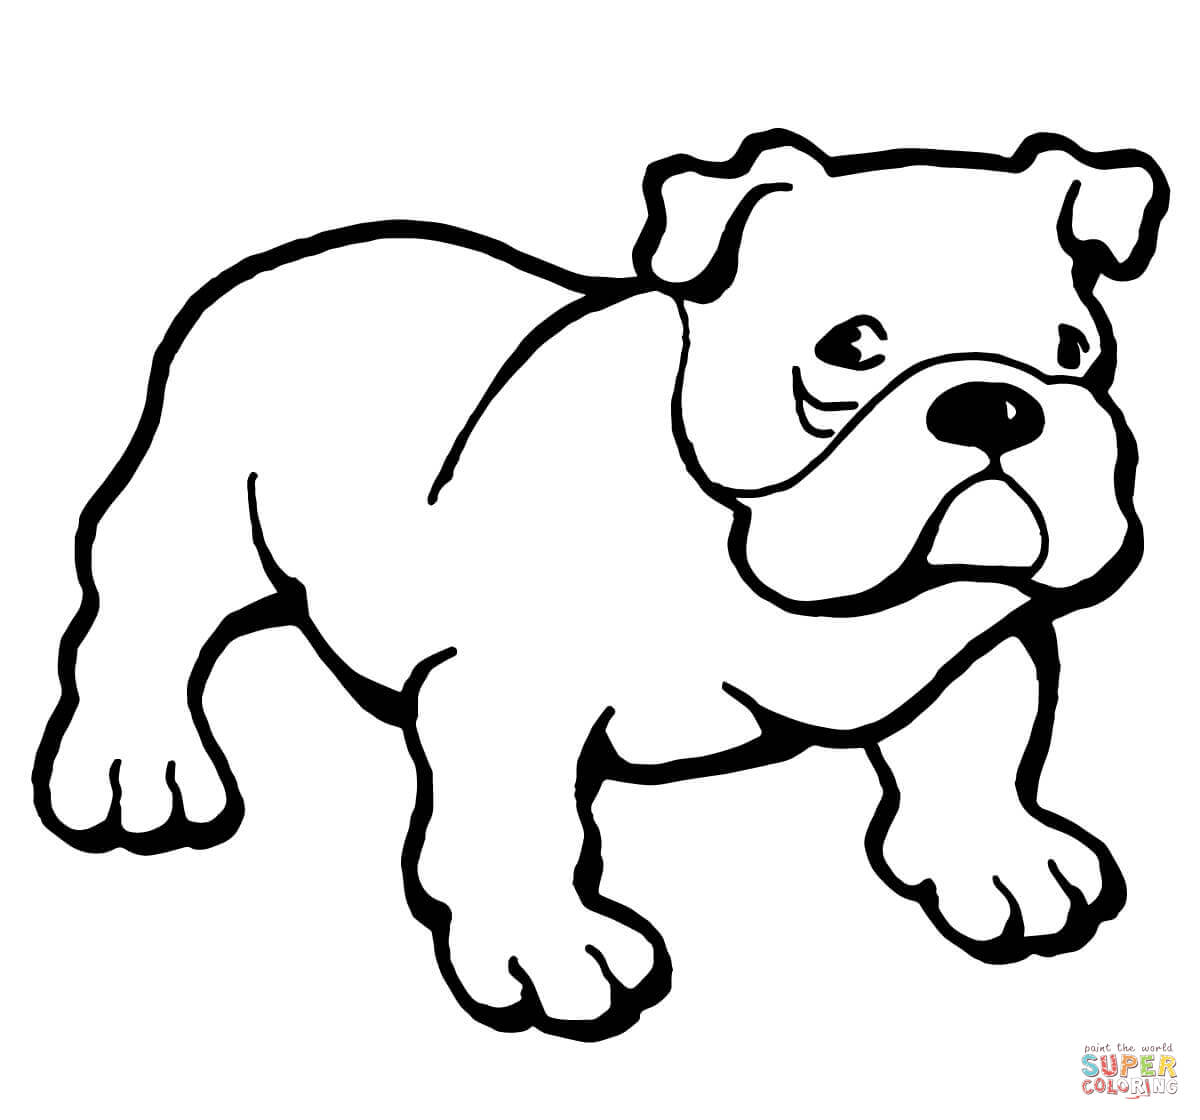 Bulldog coloring page free printable coloring pages